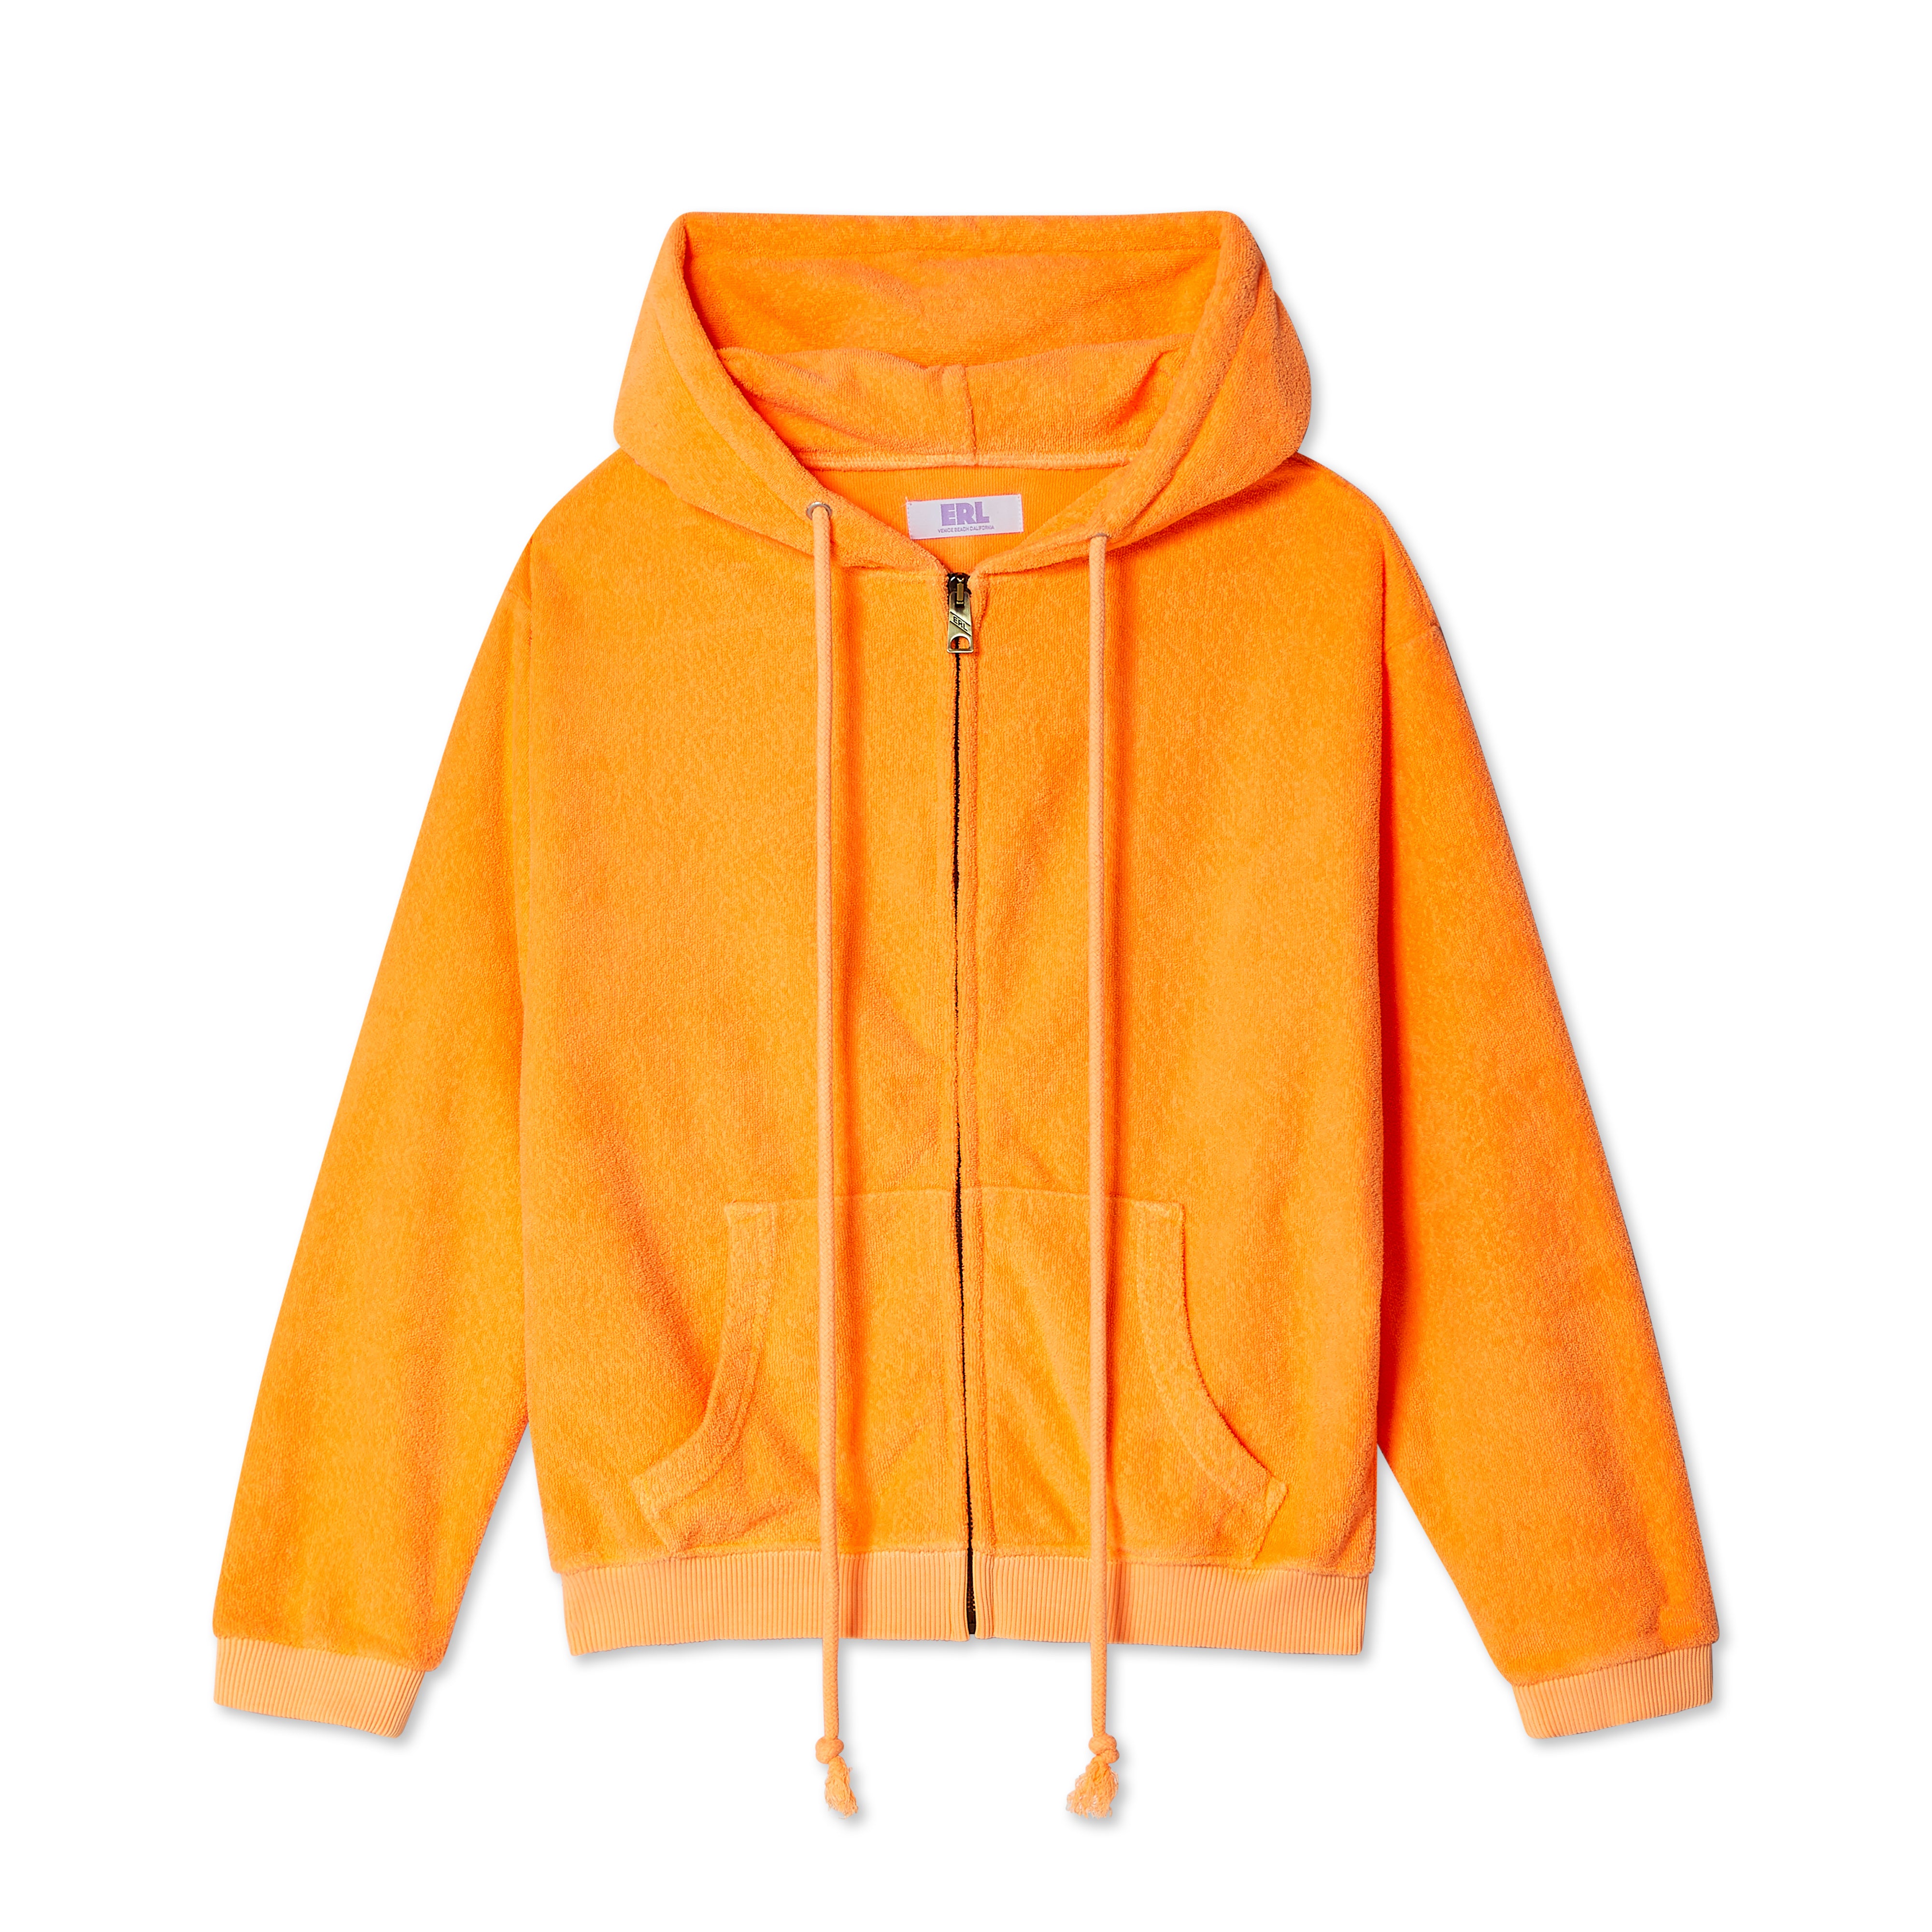 ERL - Women's Terry Zipped Hoodie - (Orange) – DSMNY E-SHOP